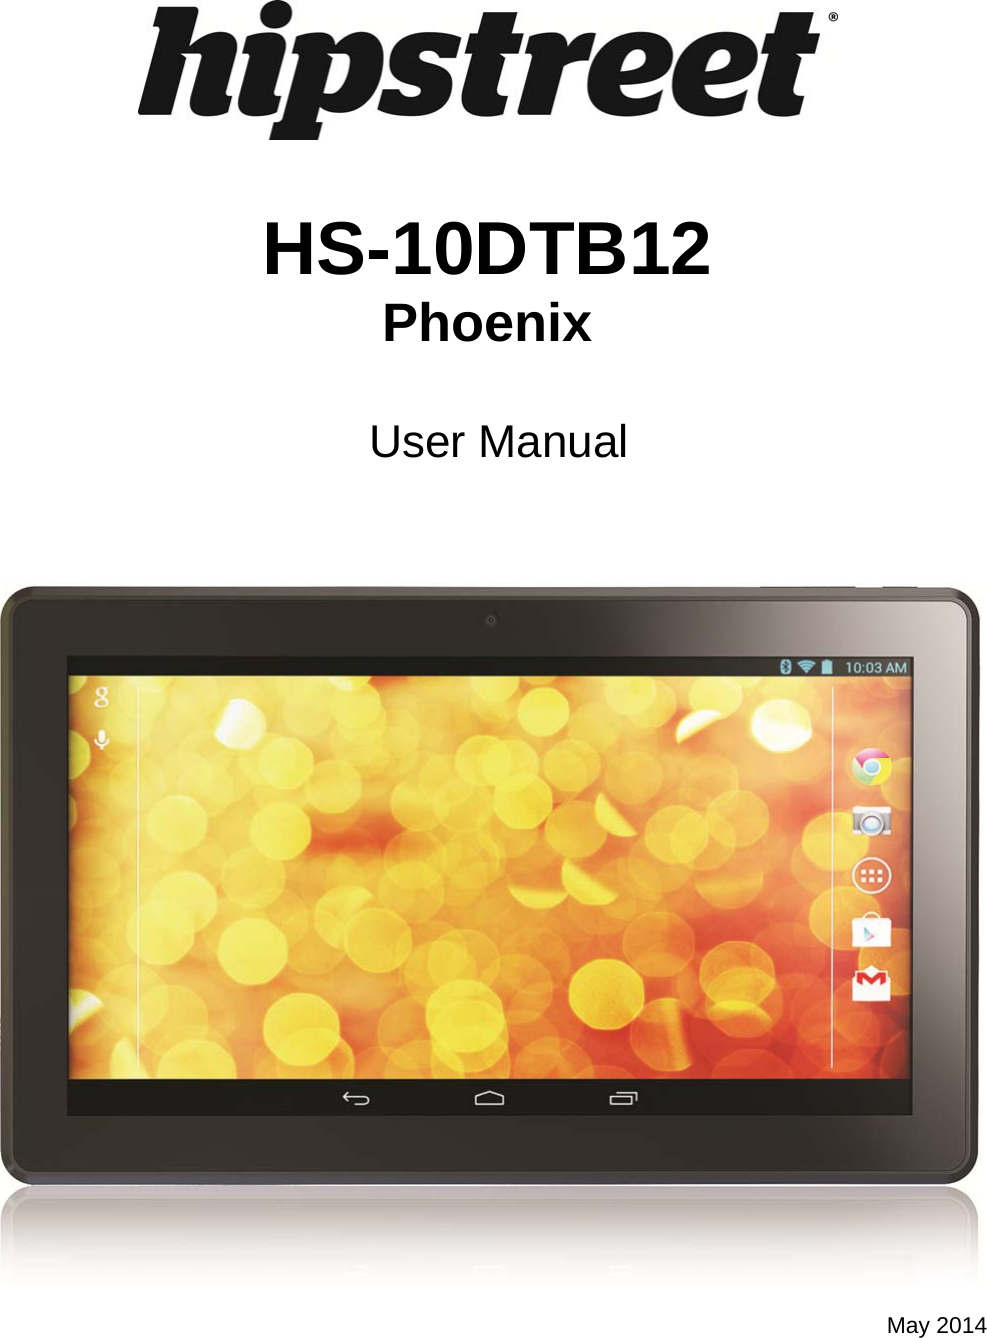    HS-10DTB12 Phoenix   User Manual     May 2014  